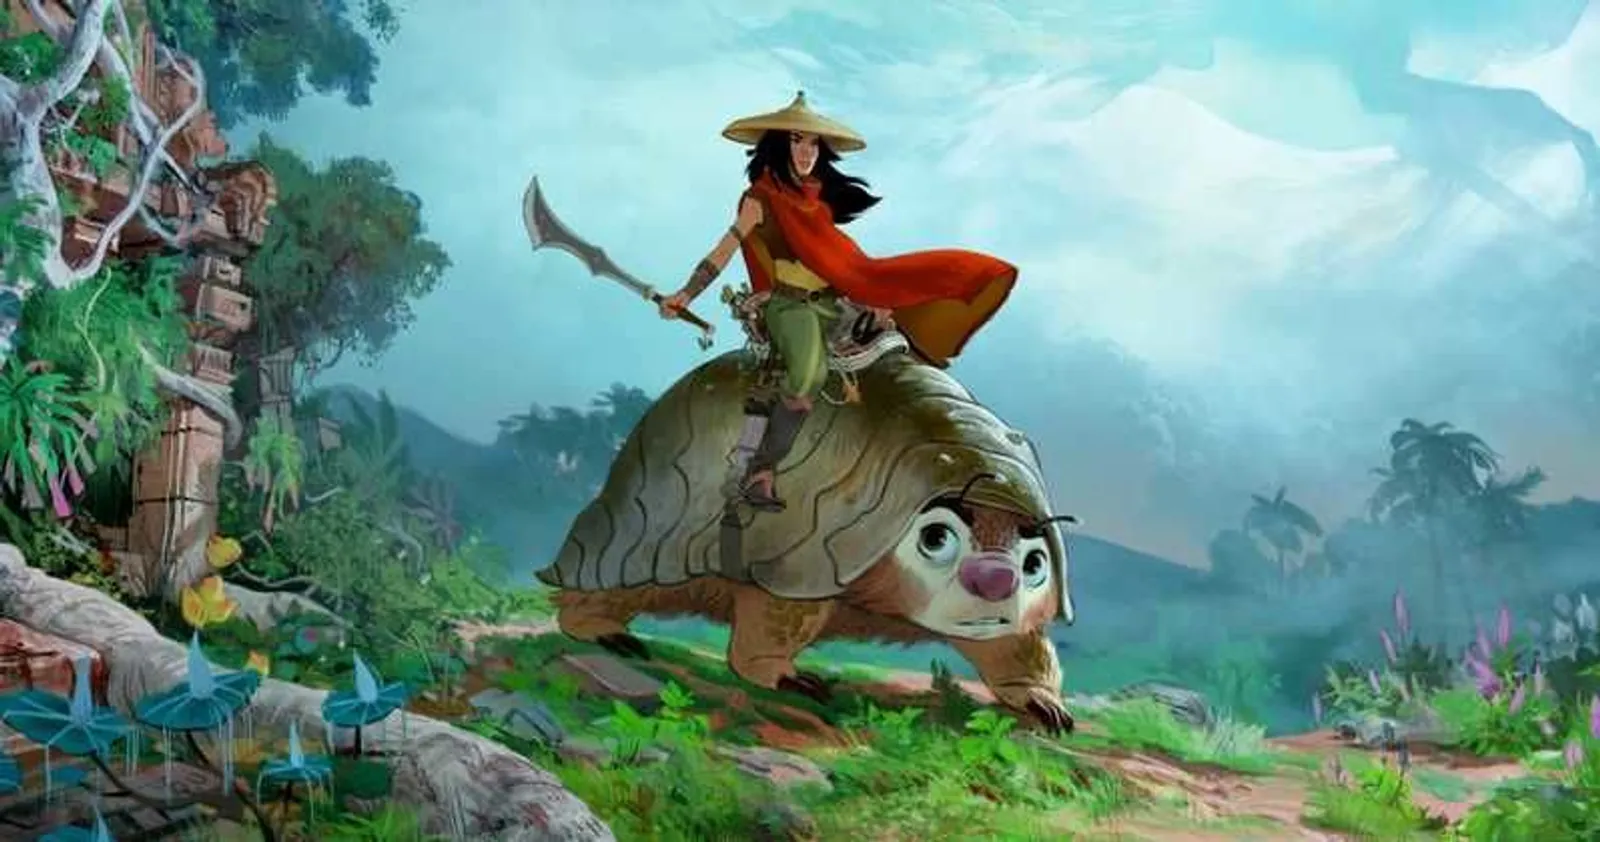 Mengaku Direkrut, Ini Konfirmasi Disney Soal Pernyataan Livi Zheng